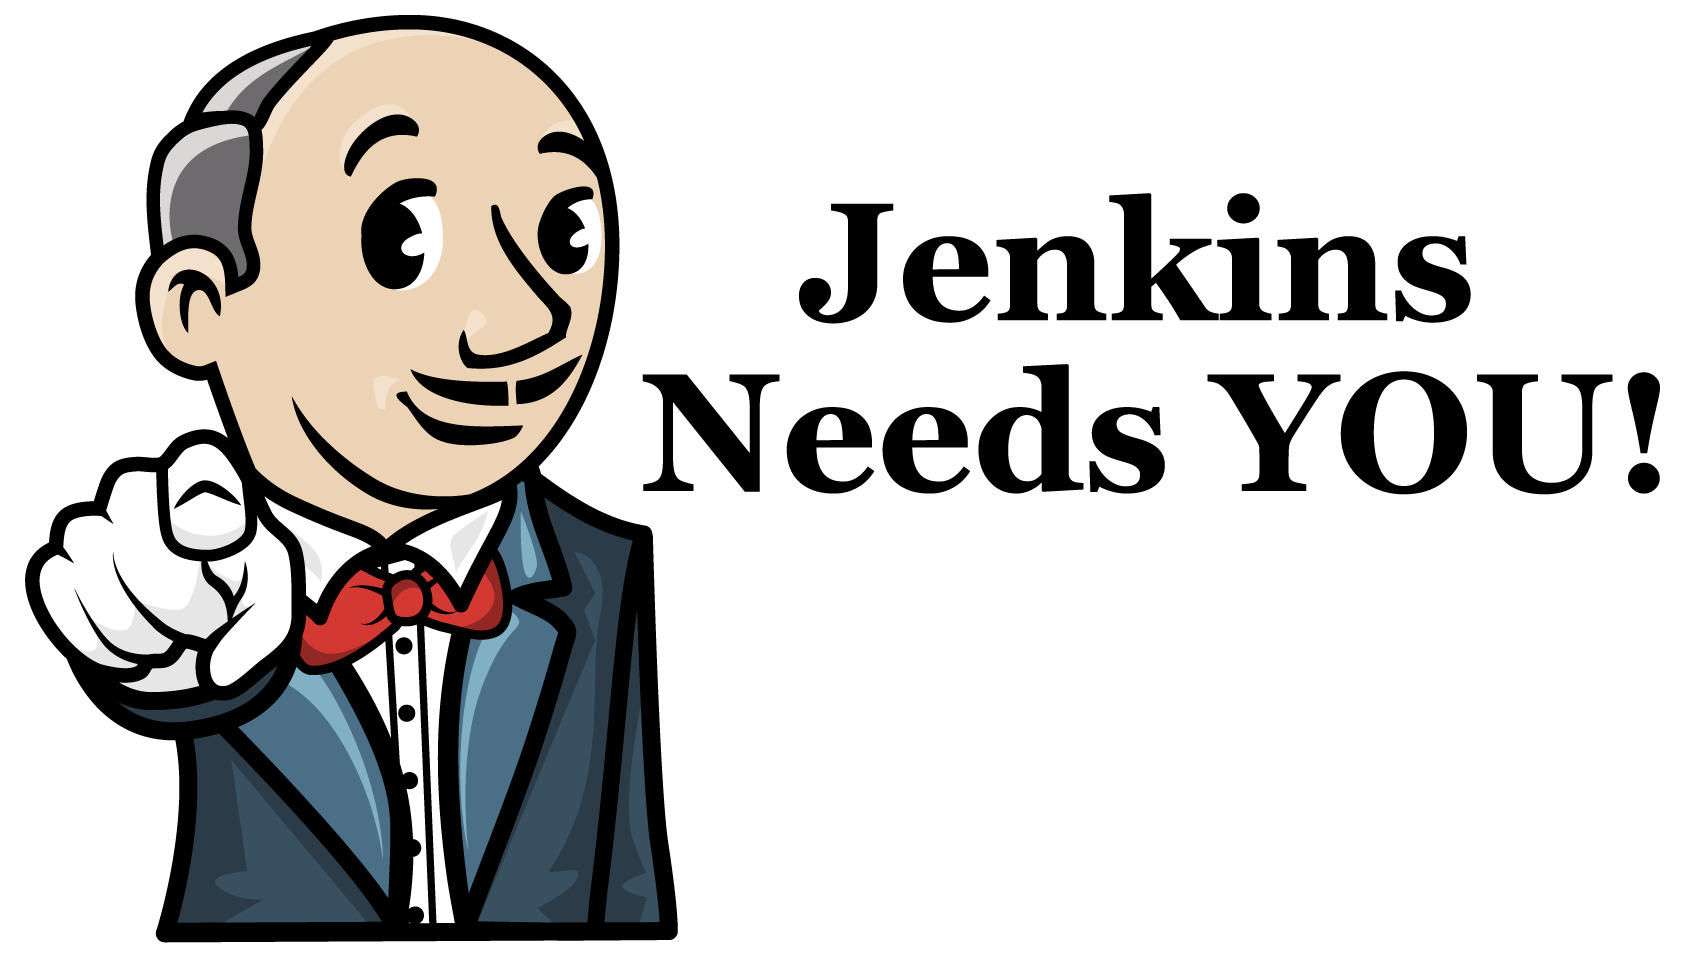 wechat/articles/2019/05/2019-05-27-docs-sig-announcement/Jenkins_Needs_You-02.png